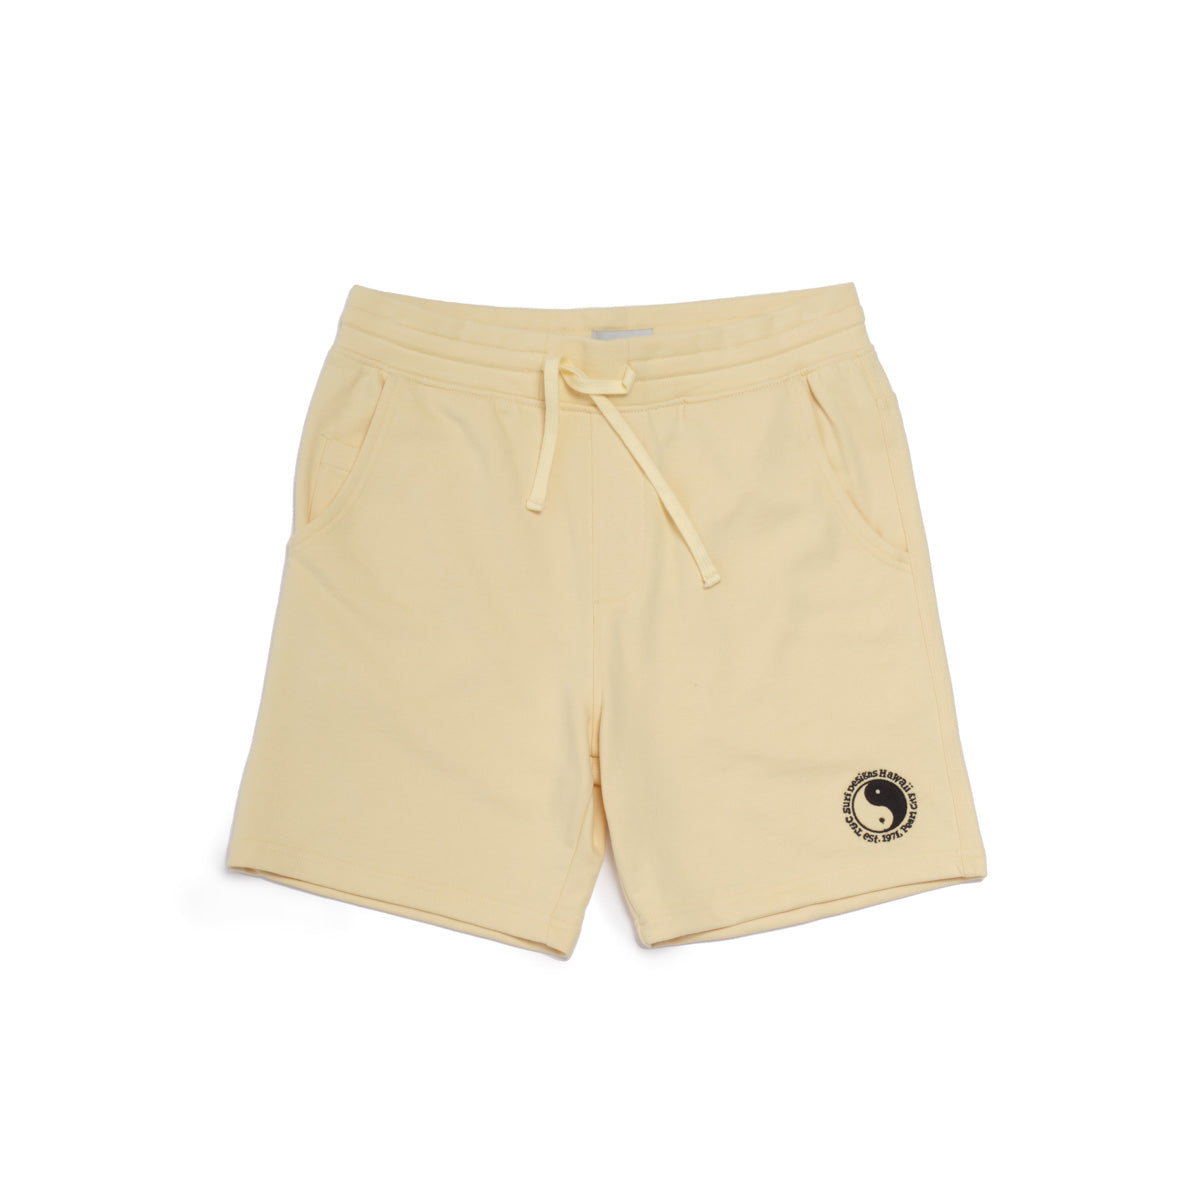 OG Sweat Shorts - Bone Yellow